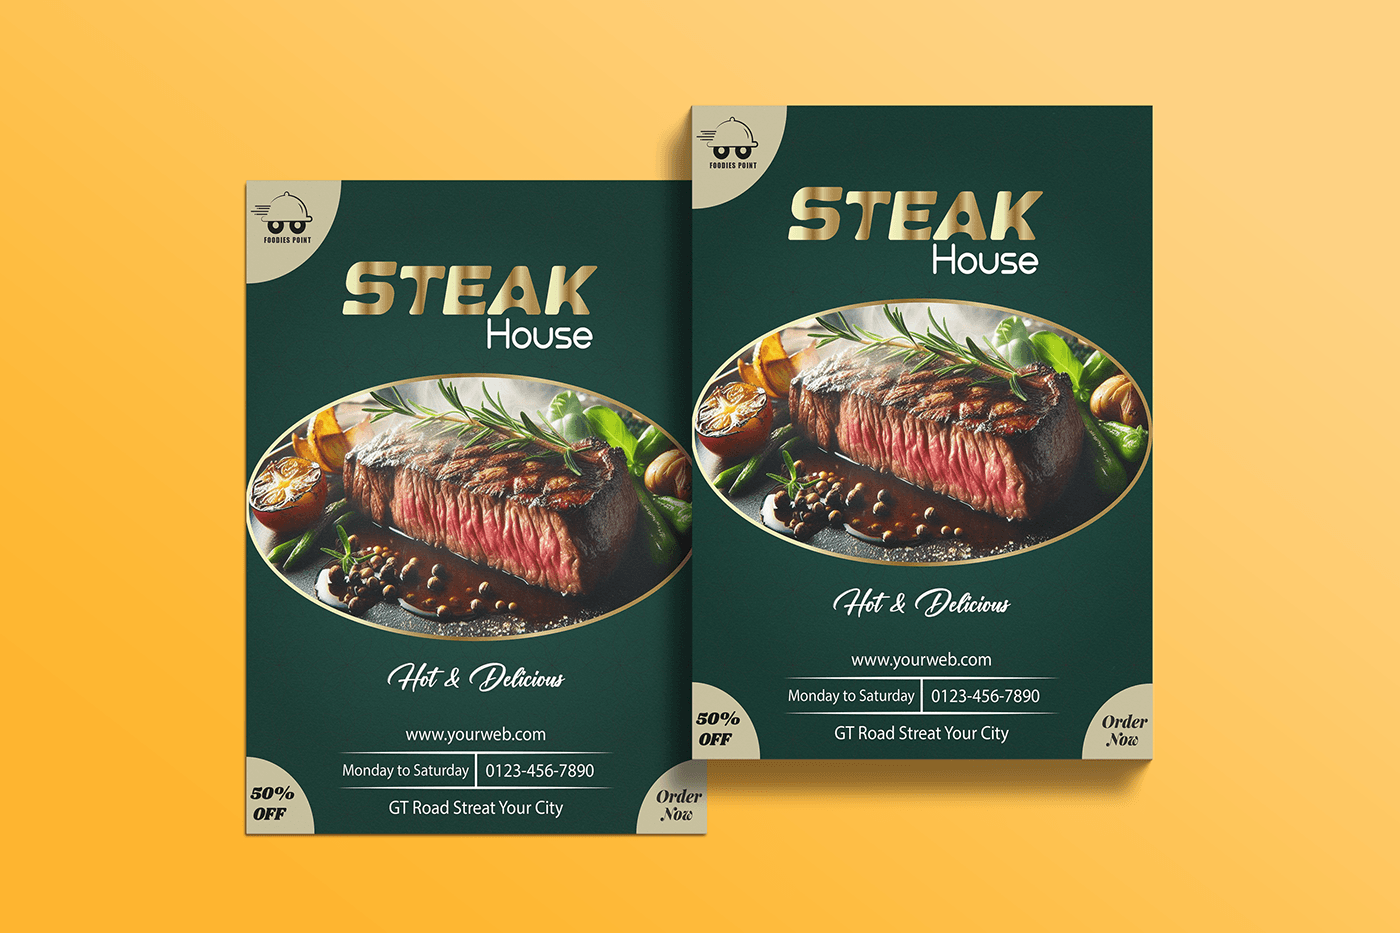 #steakhouse #Branding #restaurant #dinner #foodie #Foodphotography  #grill   #LUNCH #meat #steak  